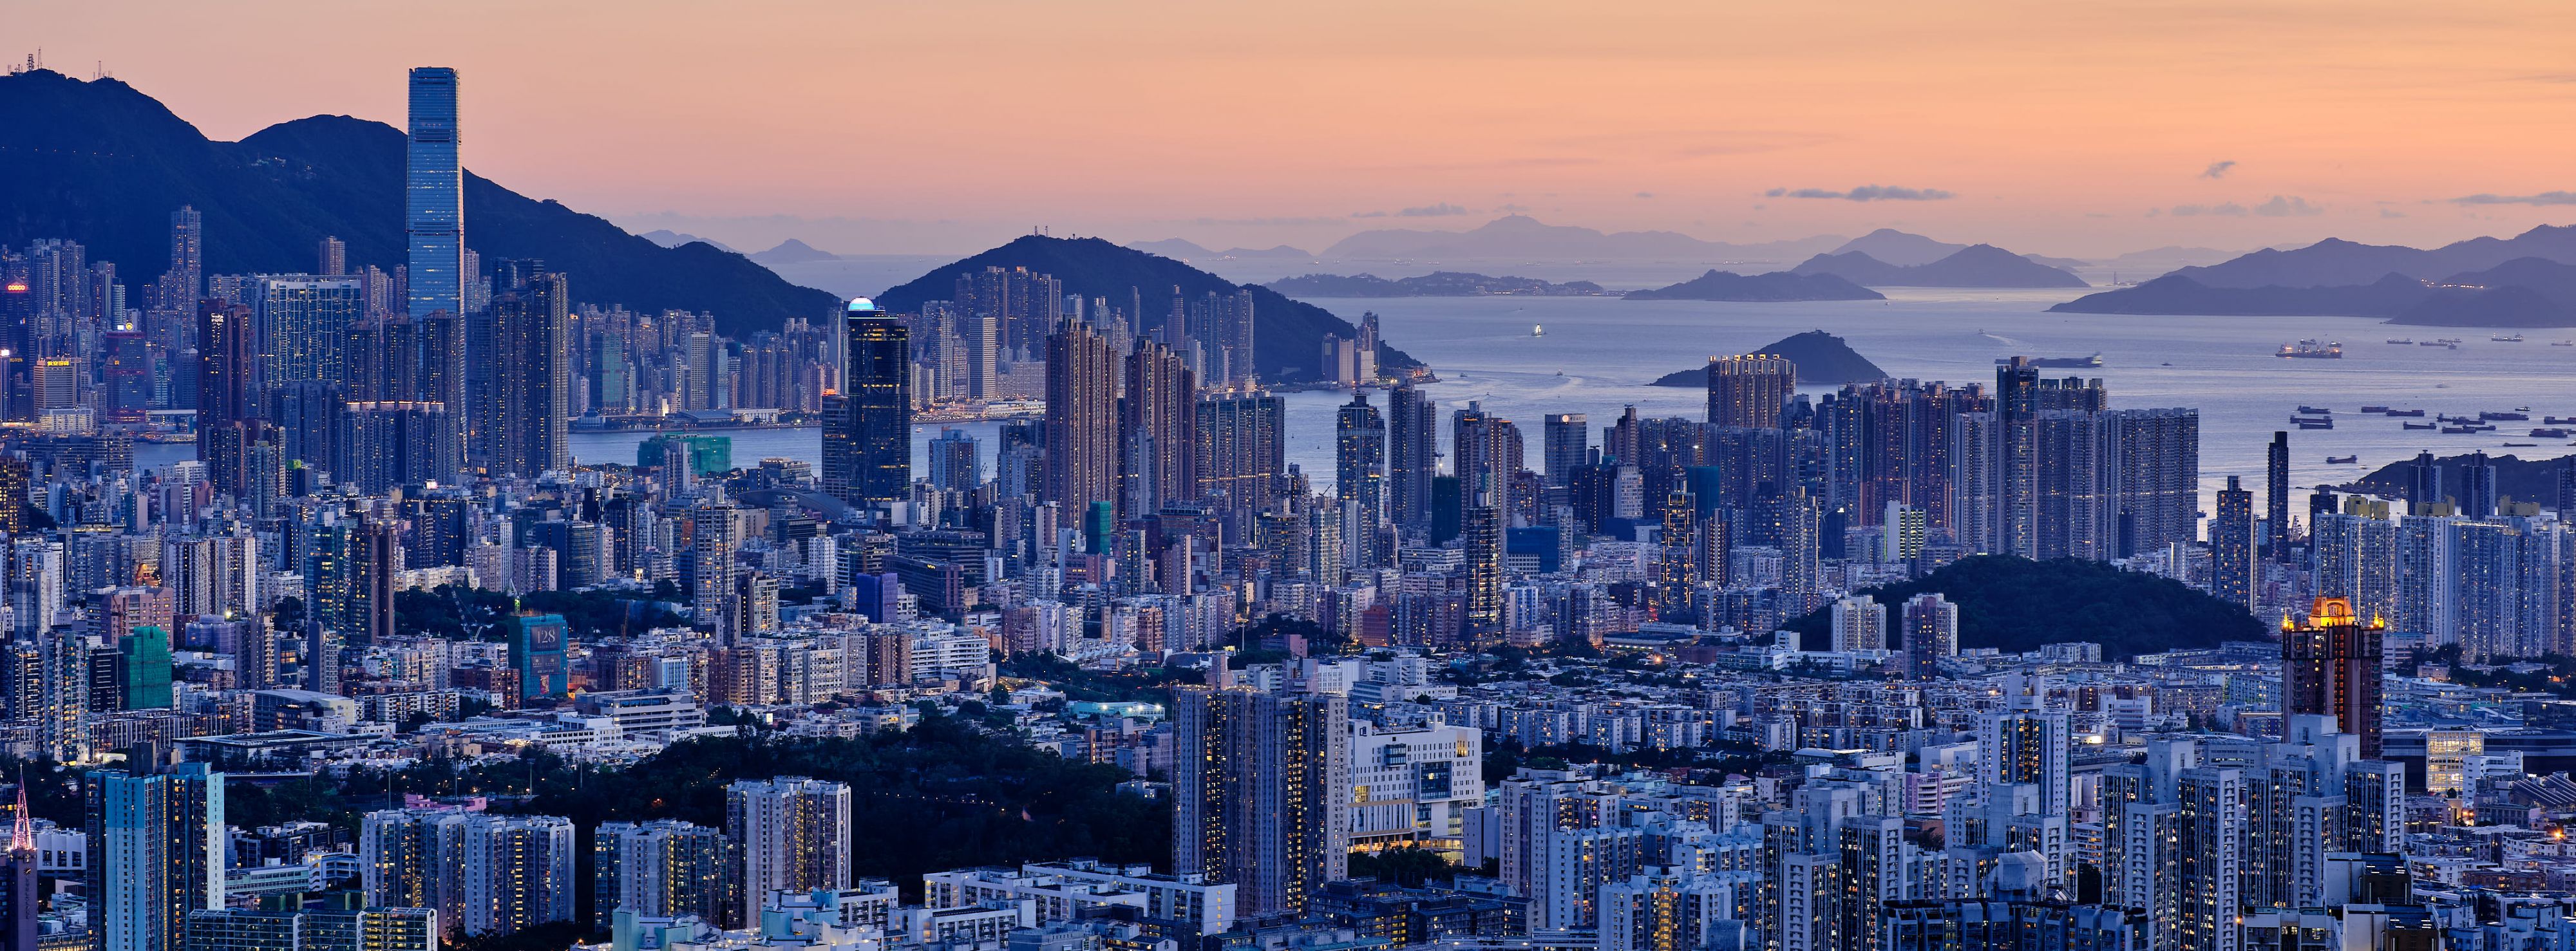 XPan Hong Kong sunset blue hour skyline